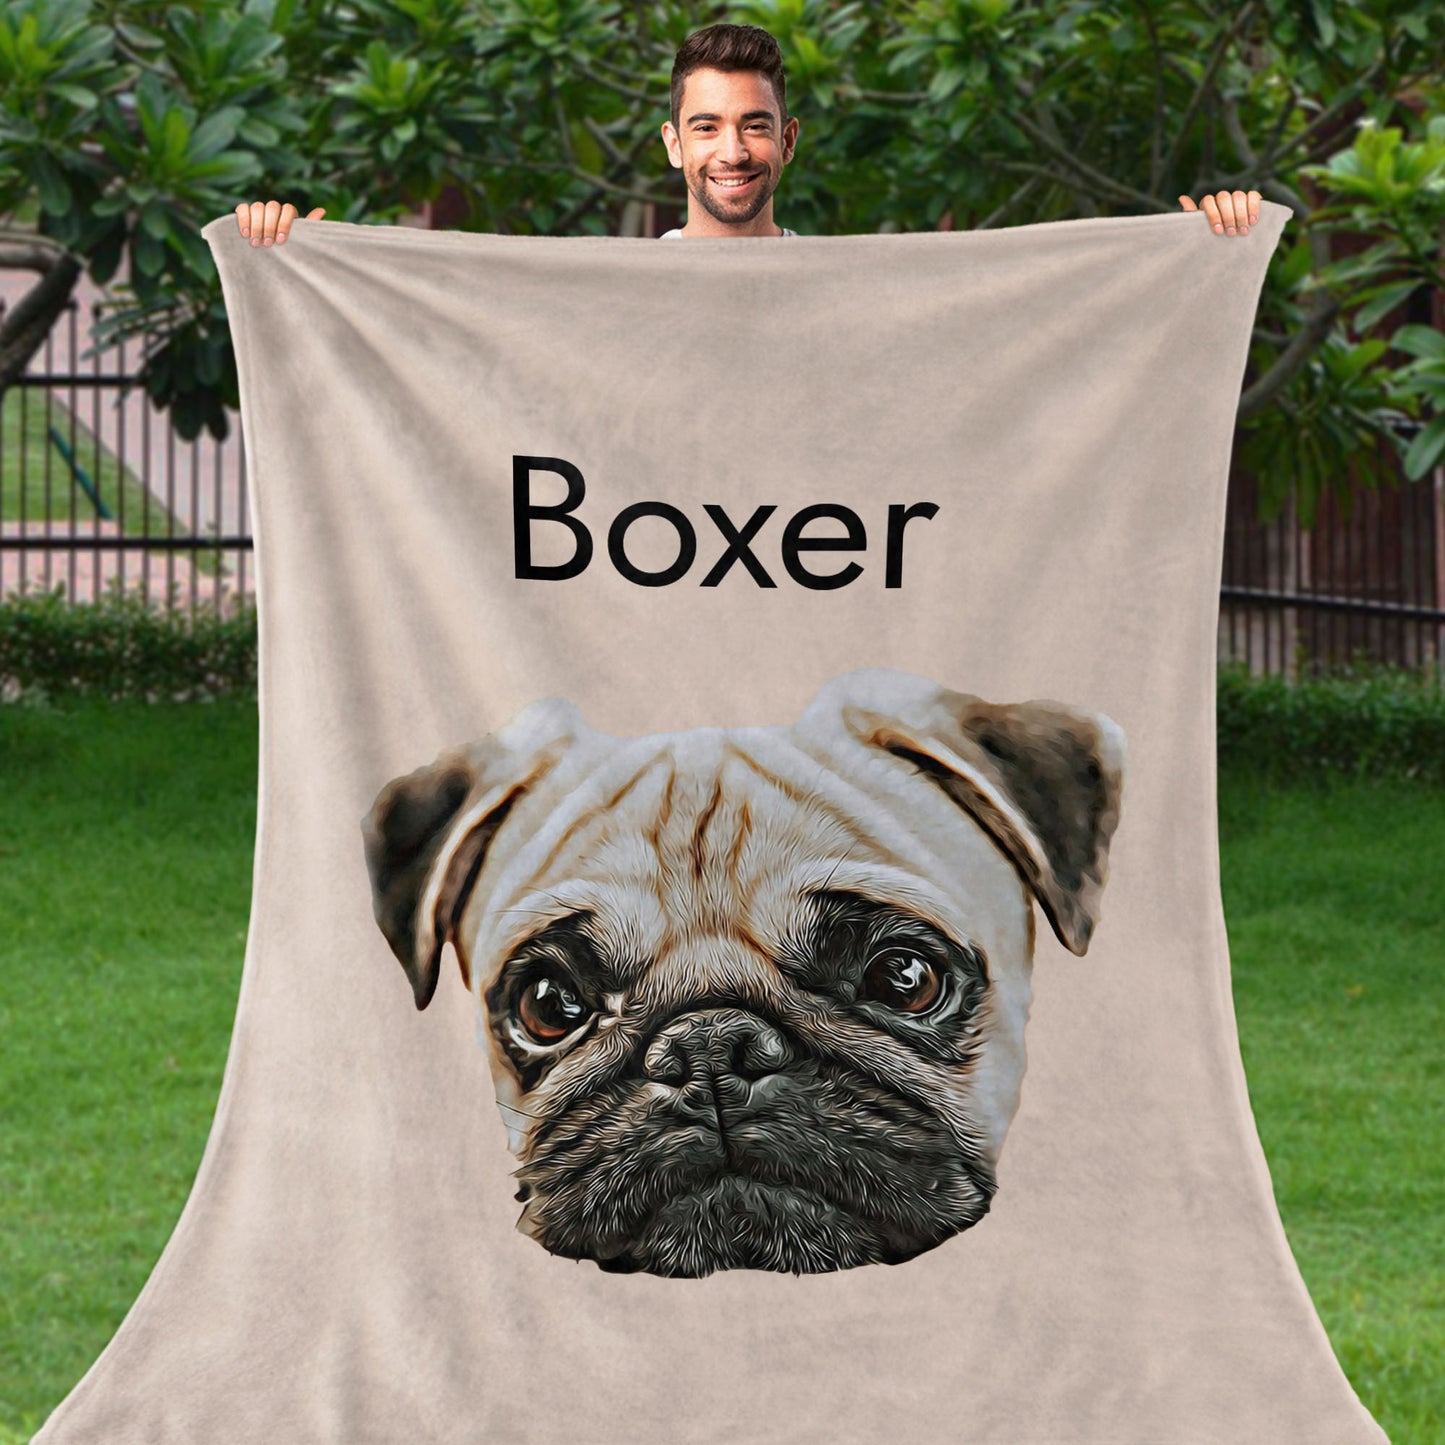 Blanket with Custom Pet Portrait